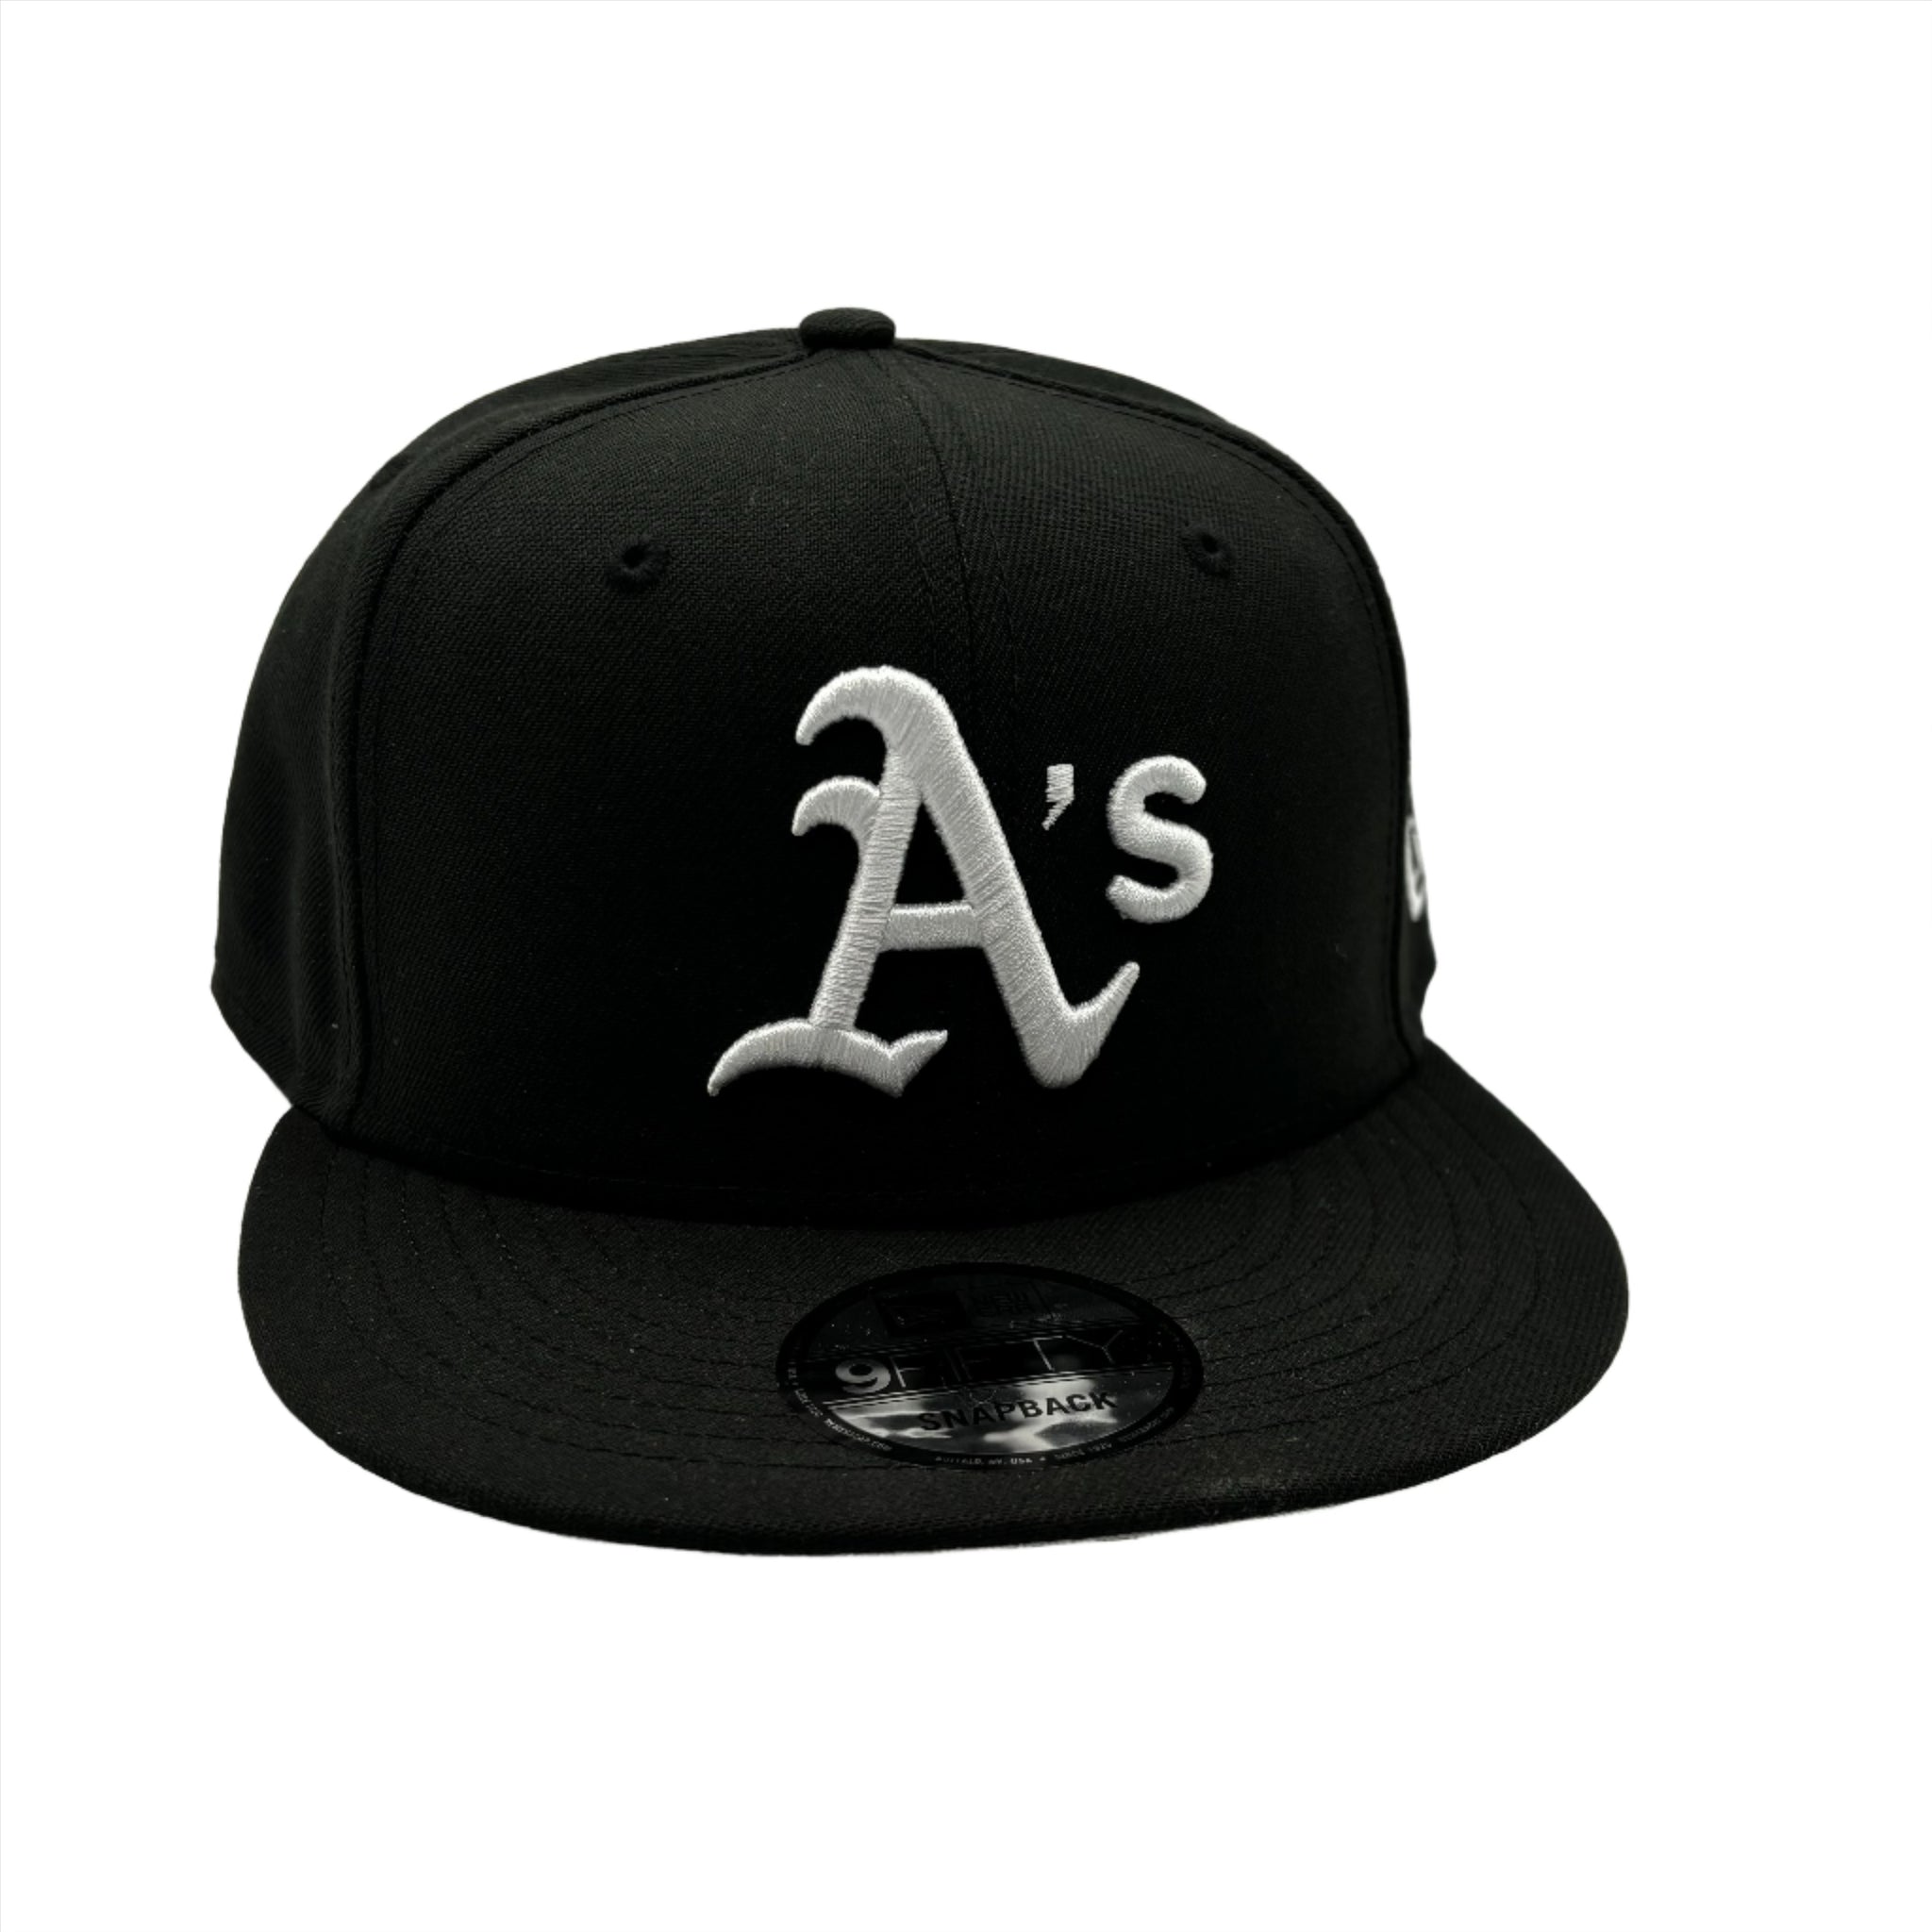 Oakland Athletics Chain Stitch Black 9fifty Snapback hat